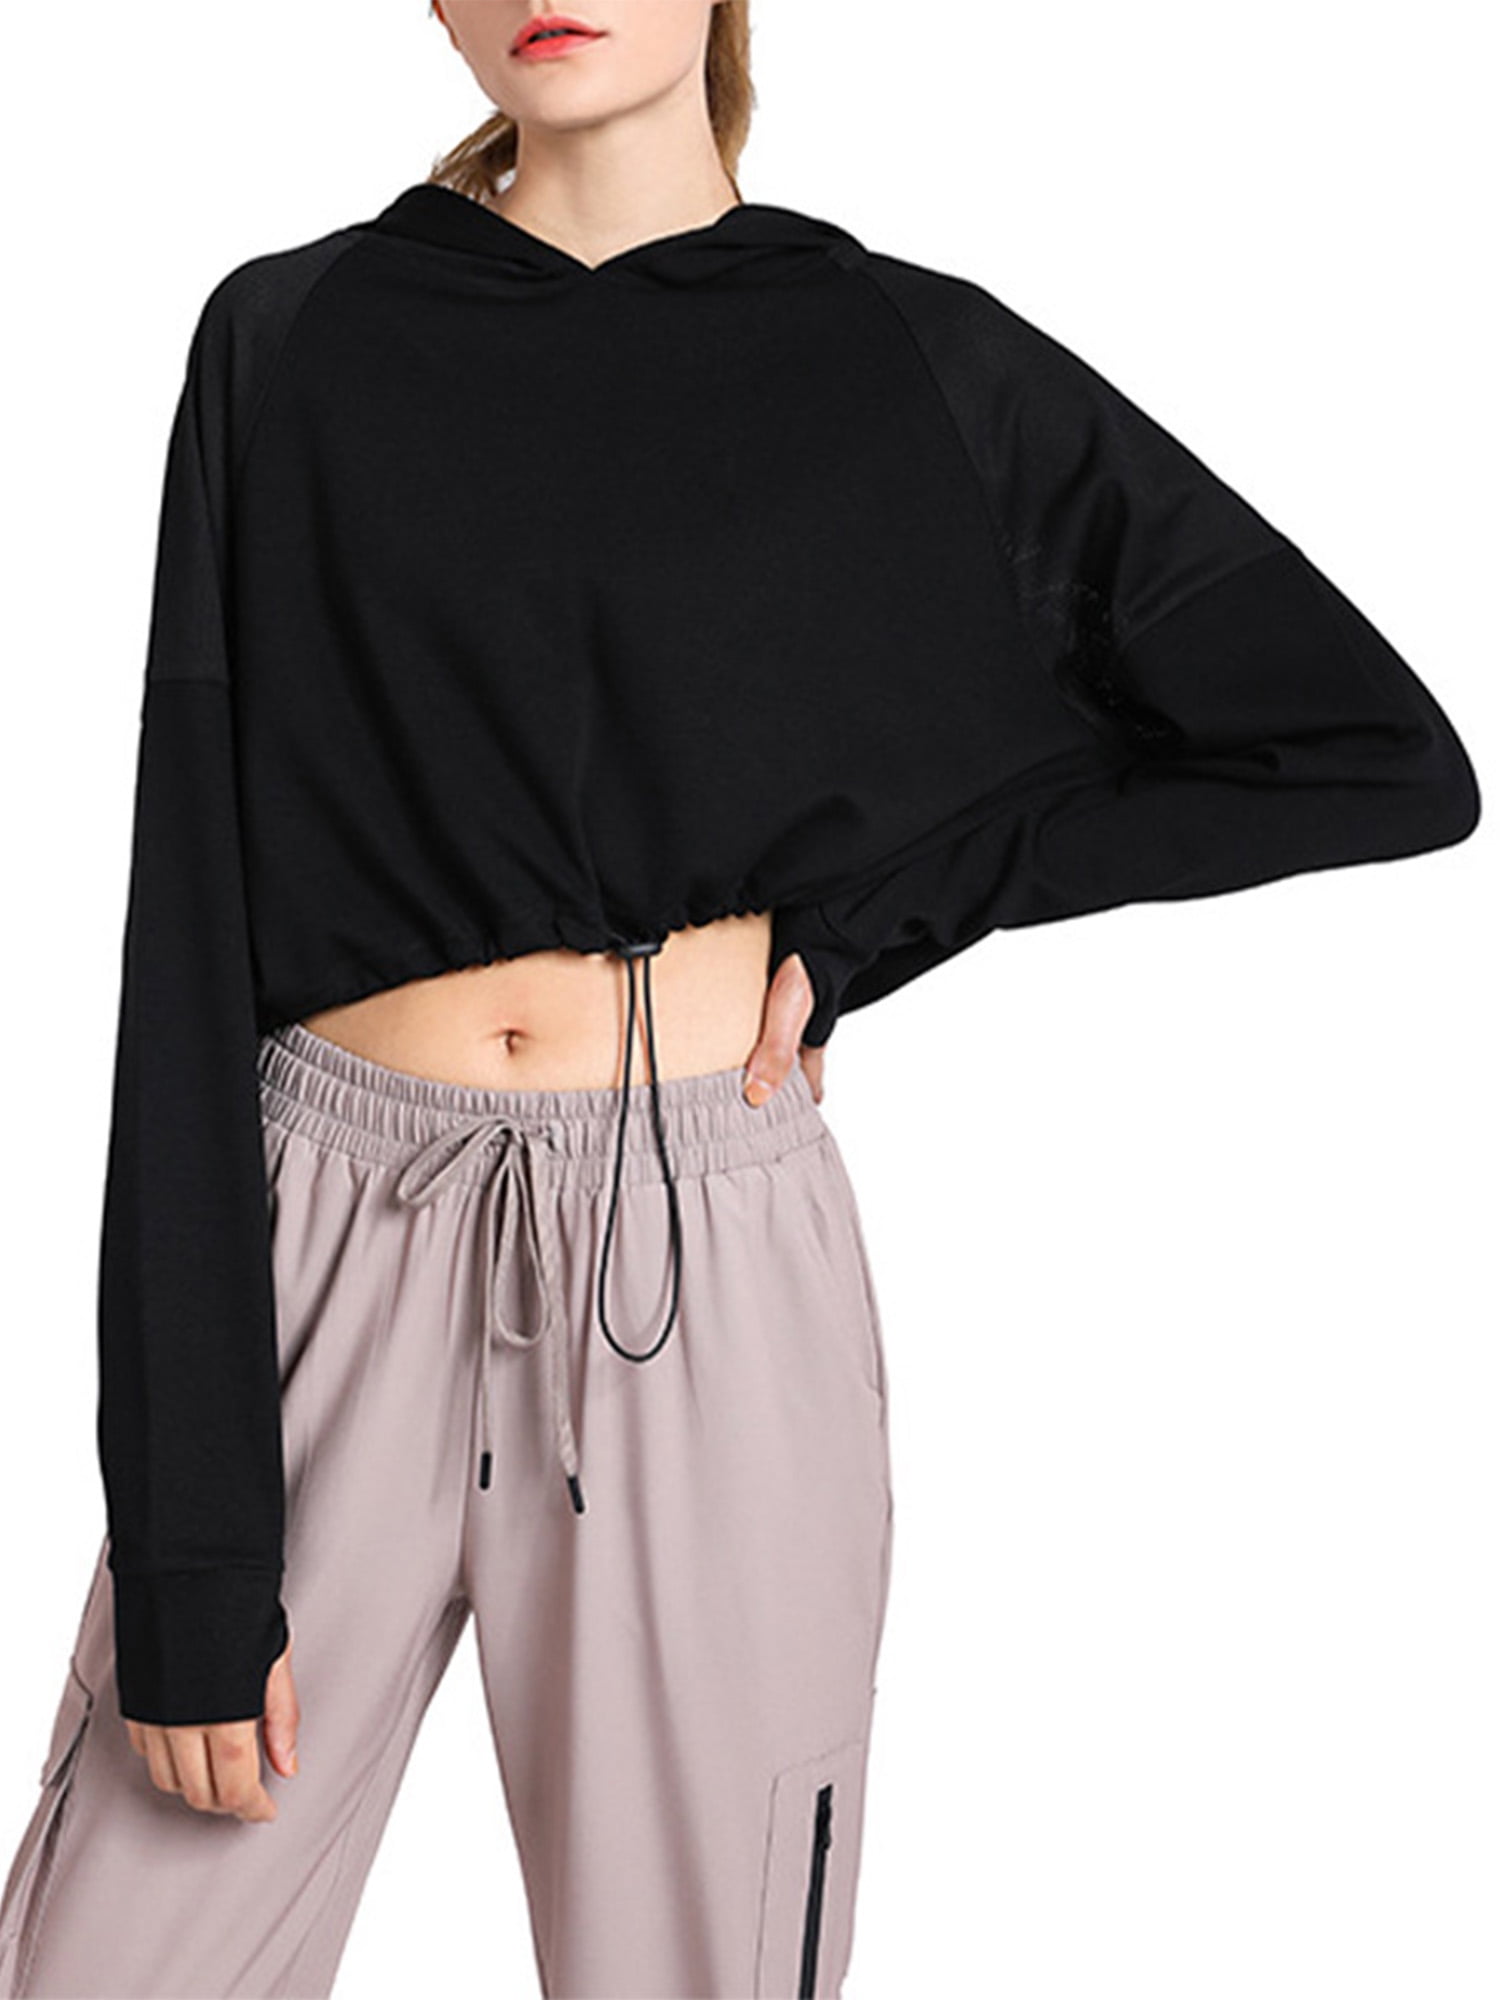 Crop Top Blouses for Women,Loose Round-Neck Long Sleeve Splice Hooded Sweatshirt Short Pullover Zipper Tops Blouse 